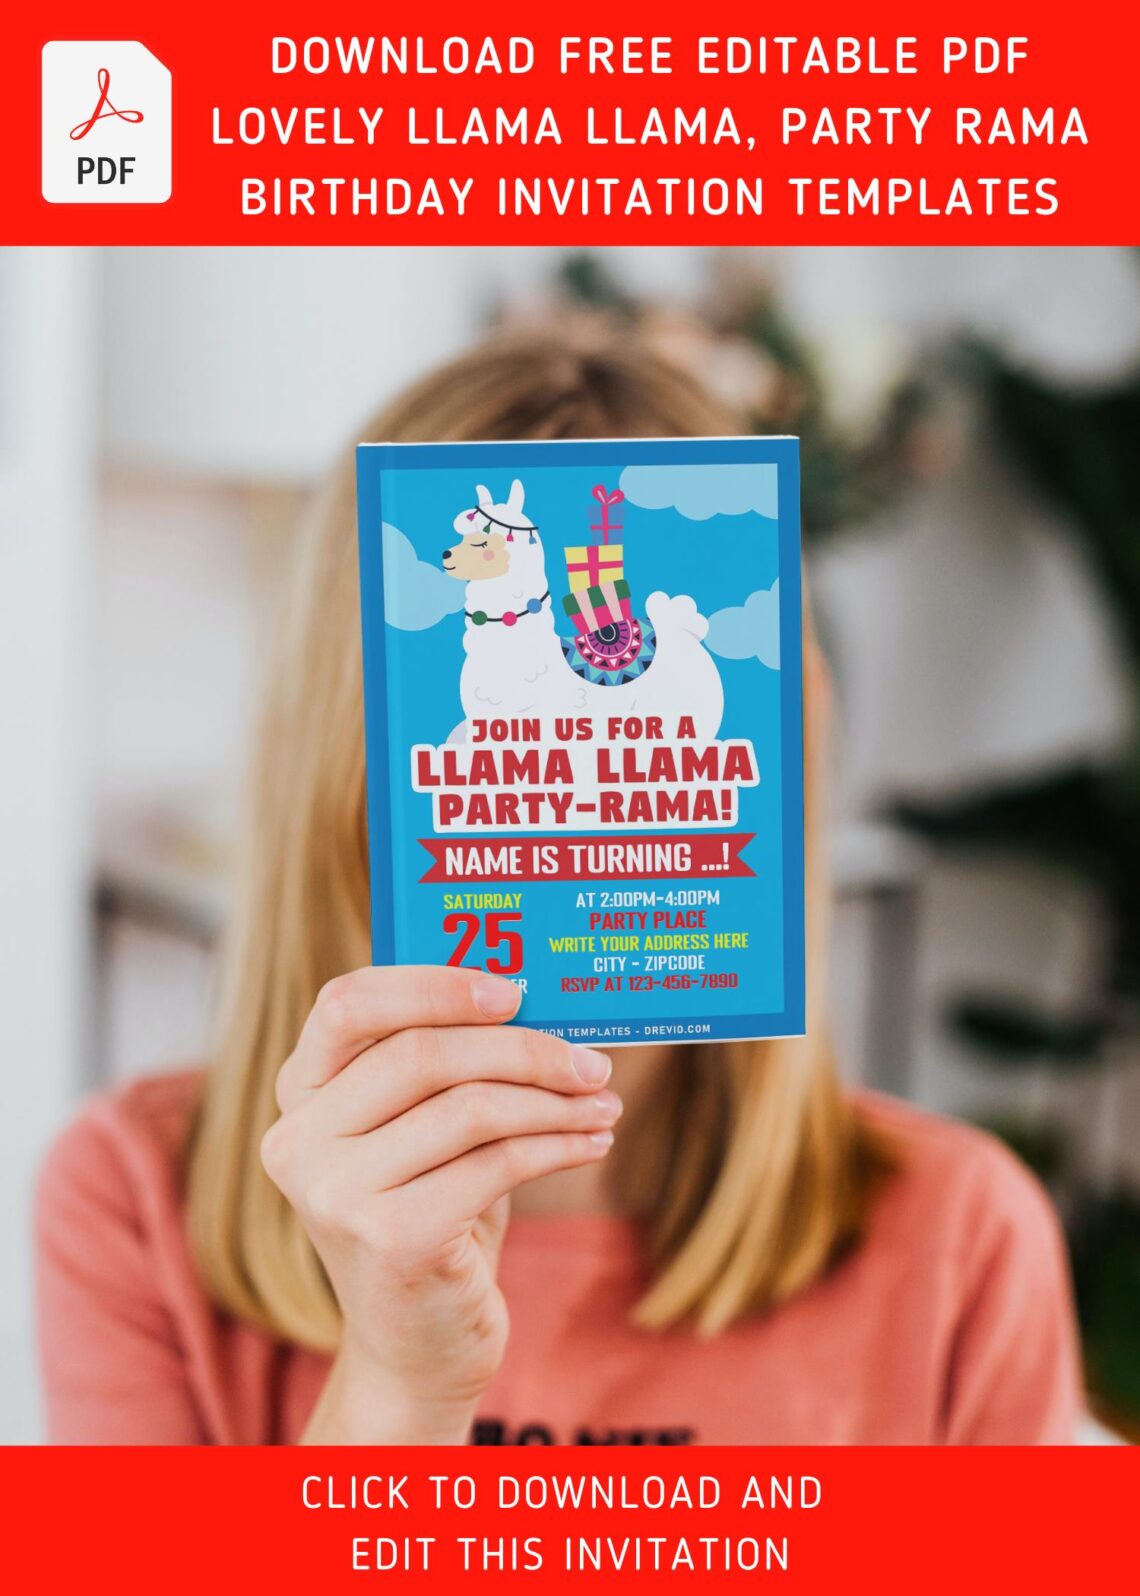 (Free Editable PDF) Lovely Llama Party-Rama Birthday Invitation Templates with